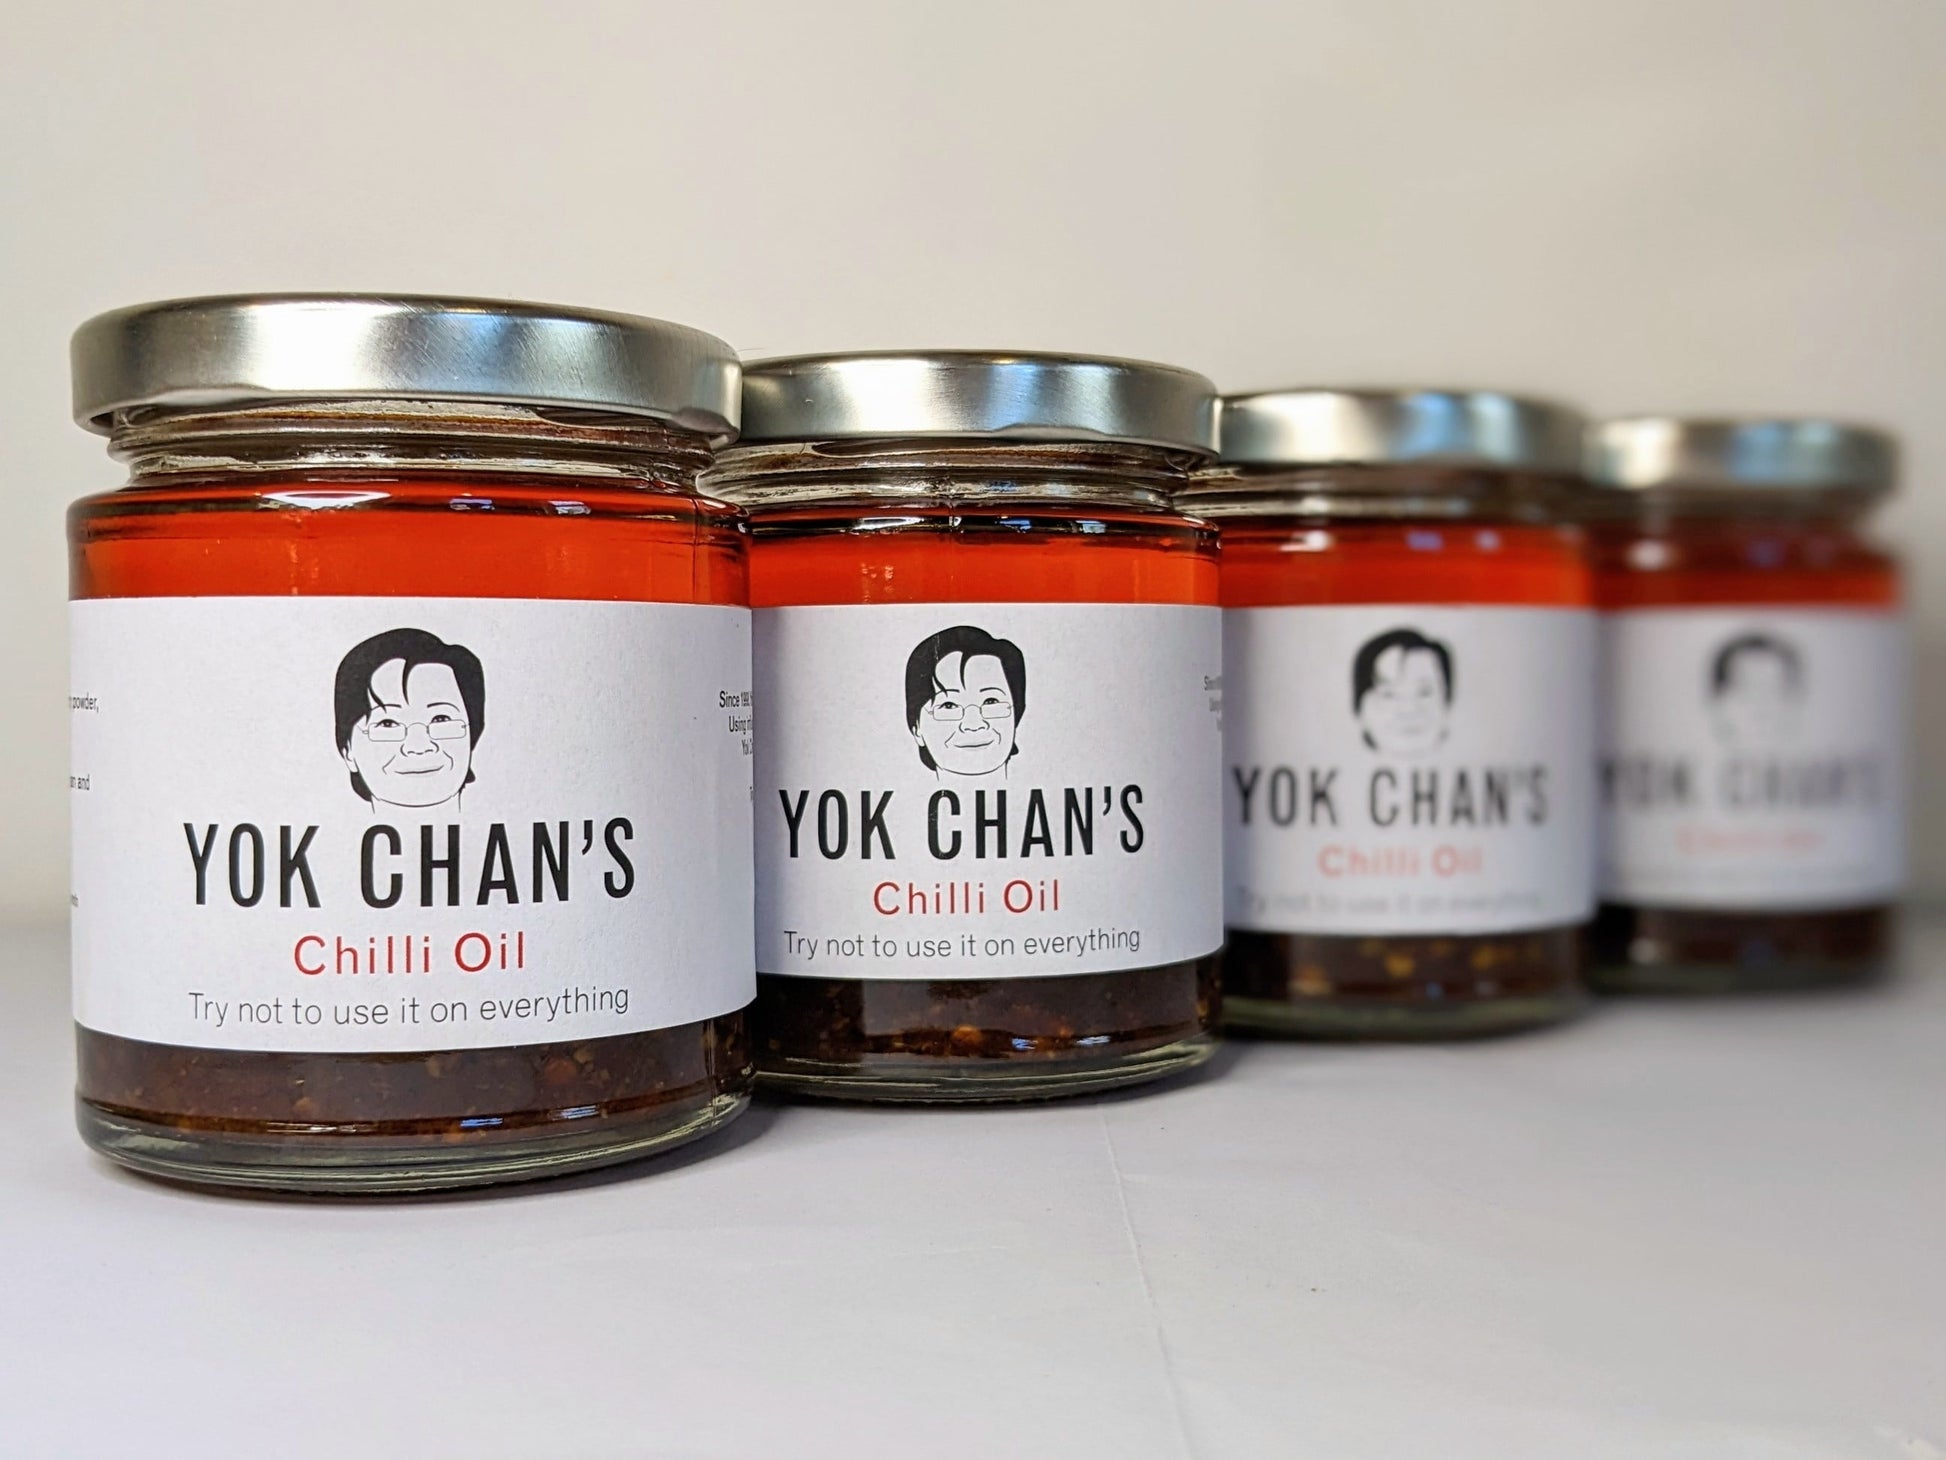 Four jars of Yok Chan's Chilli Oil left focus